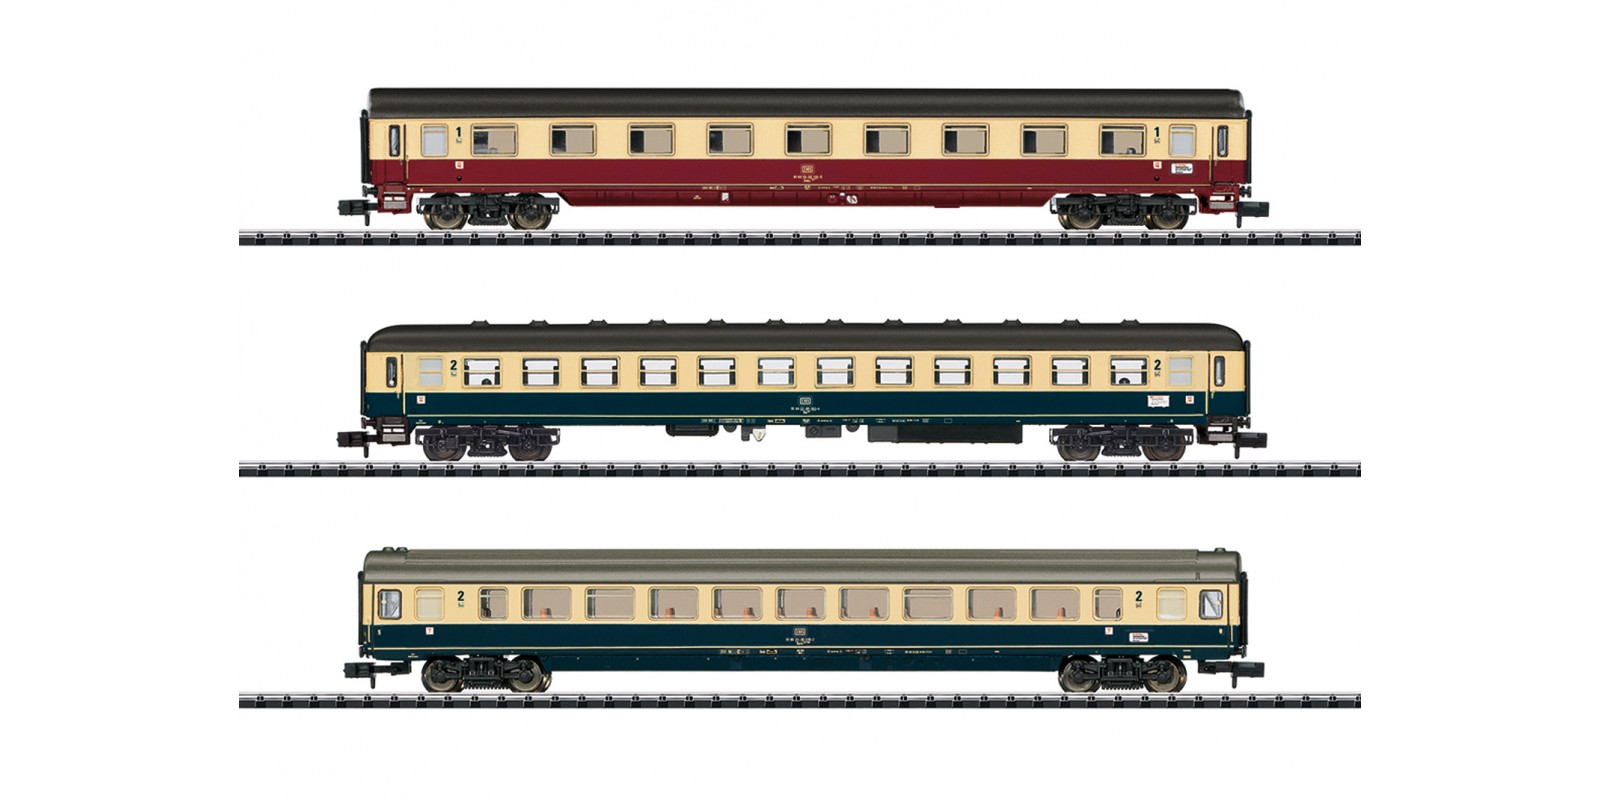 T15460 "IC 611 Gutenberg" Express Train Passenger Car Set